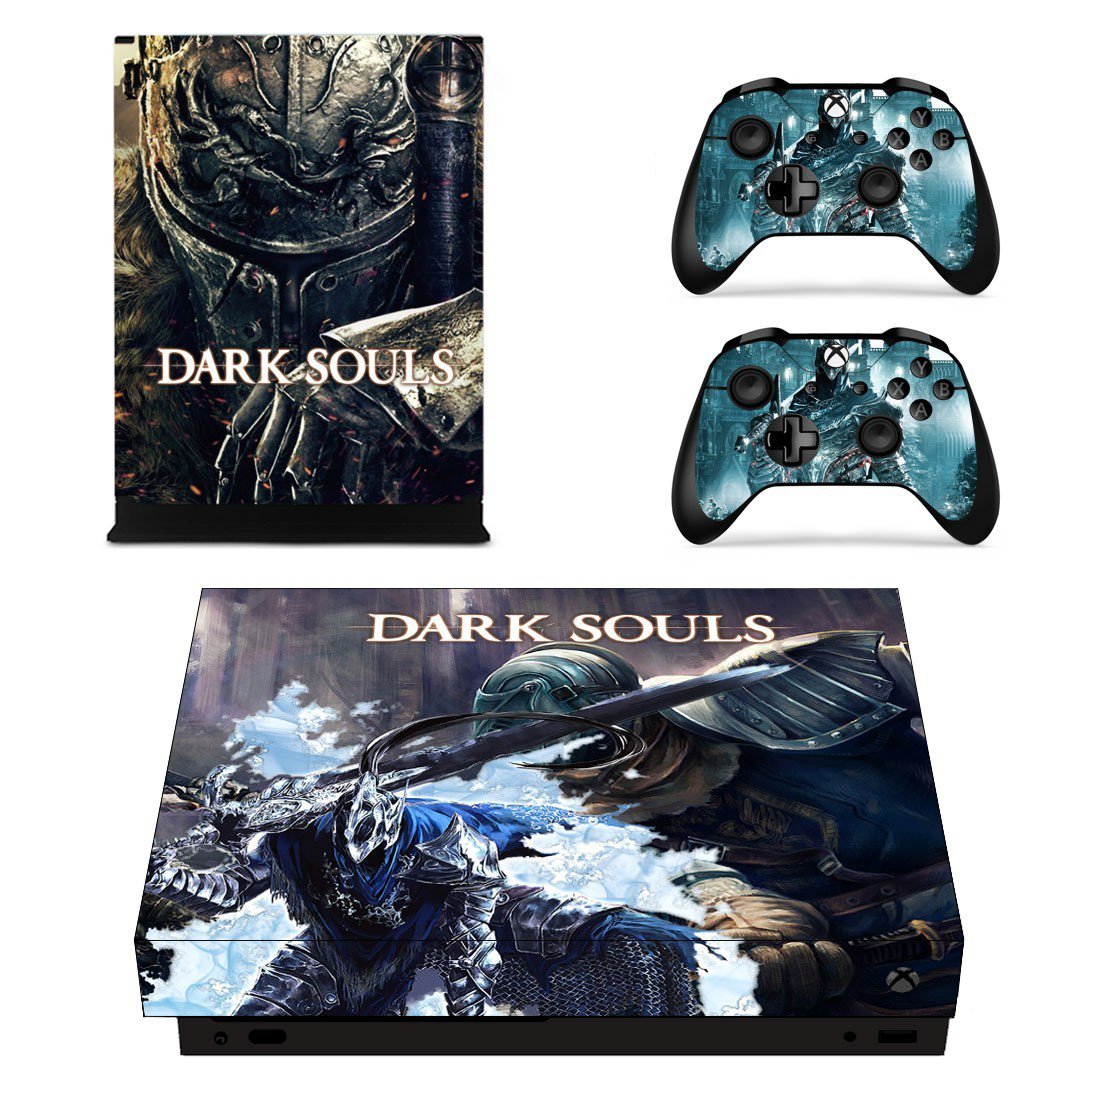 Dark Souls Skin Sticker for Xbox One X Controllers